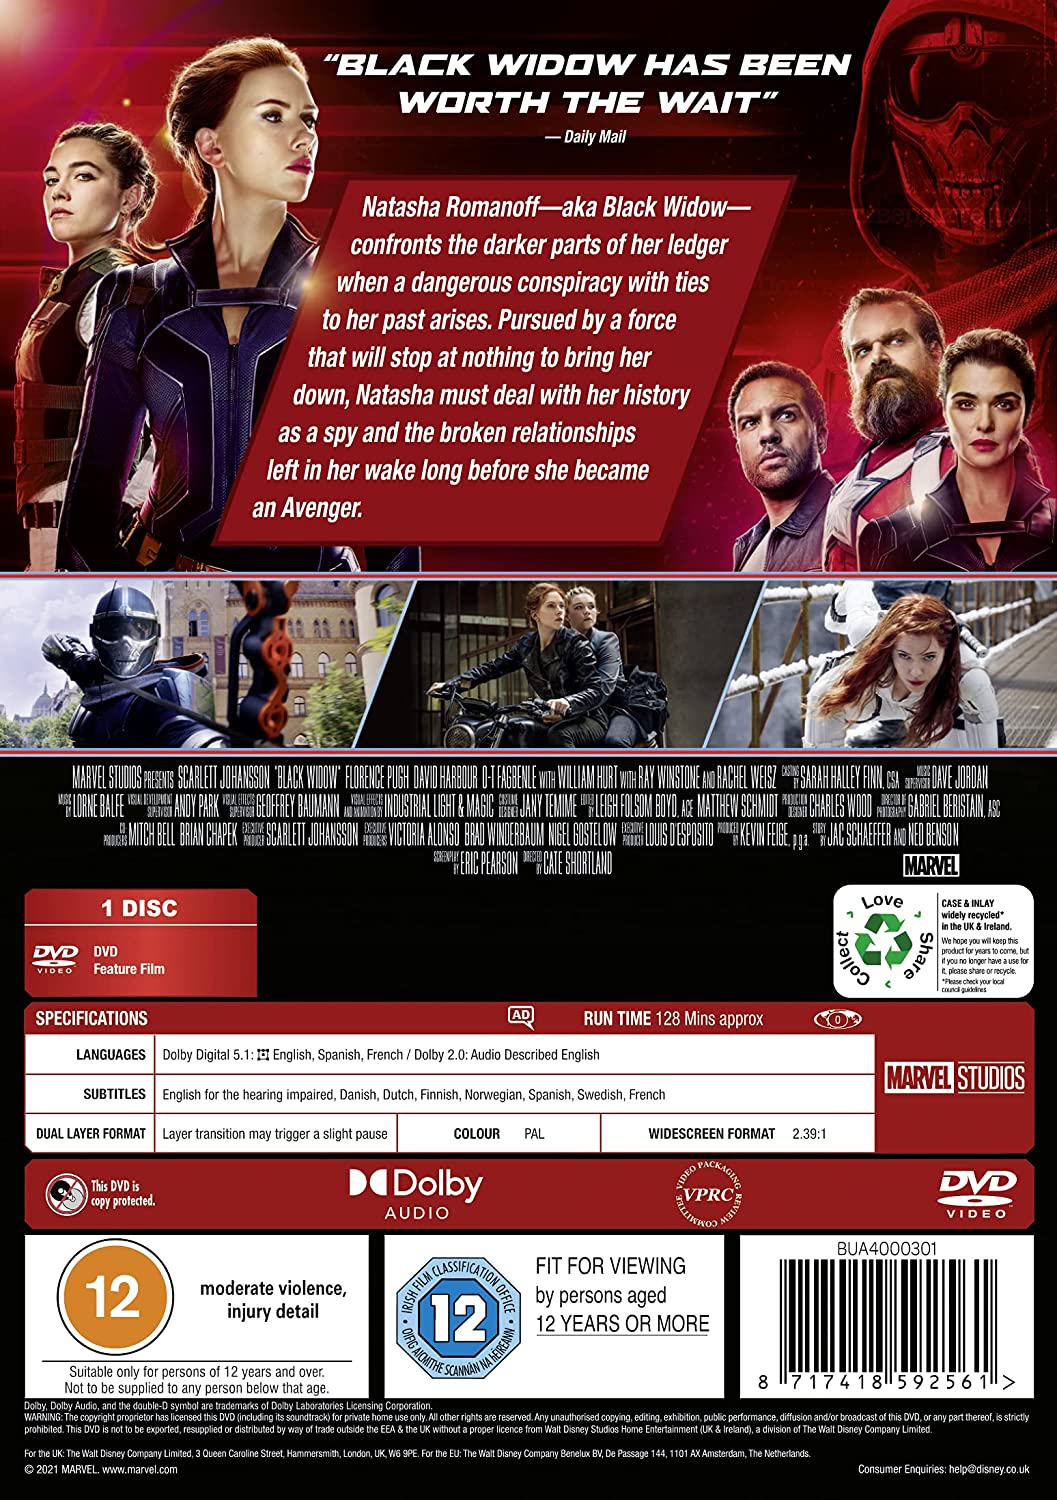 Marvel Studios Black Widow [2021] - [DVD]